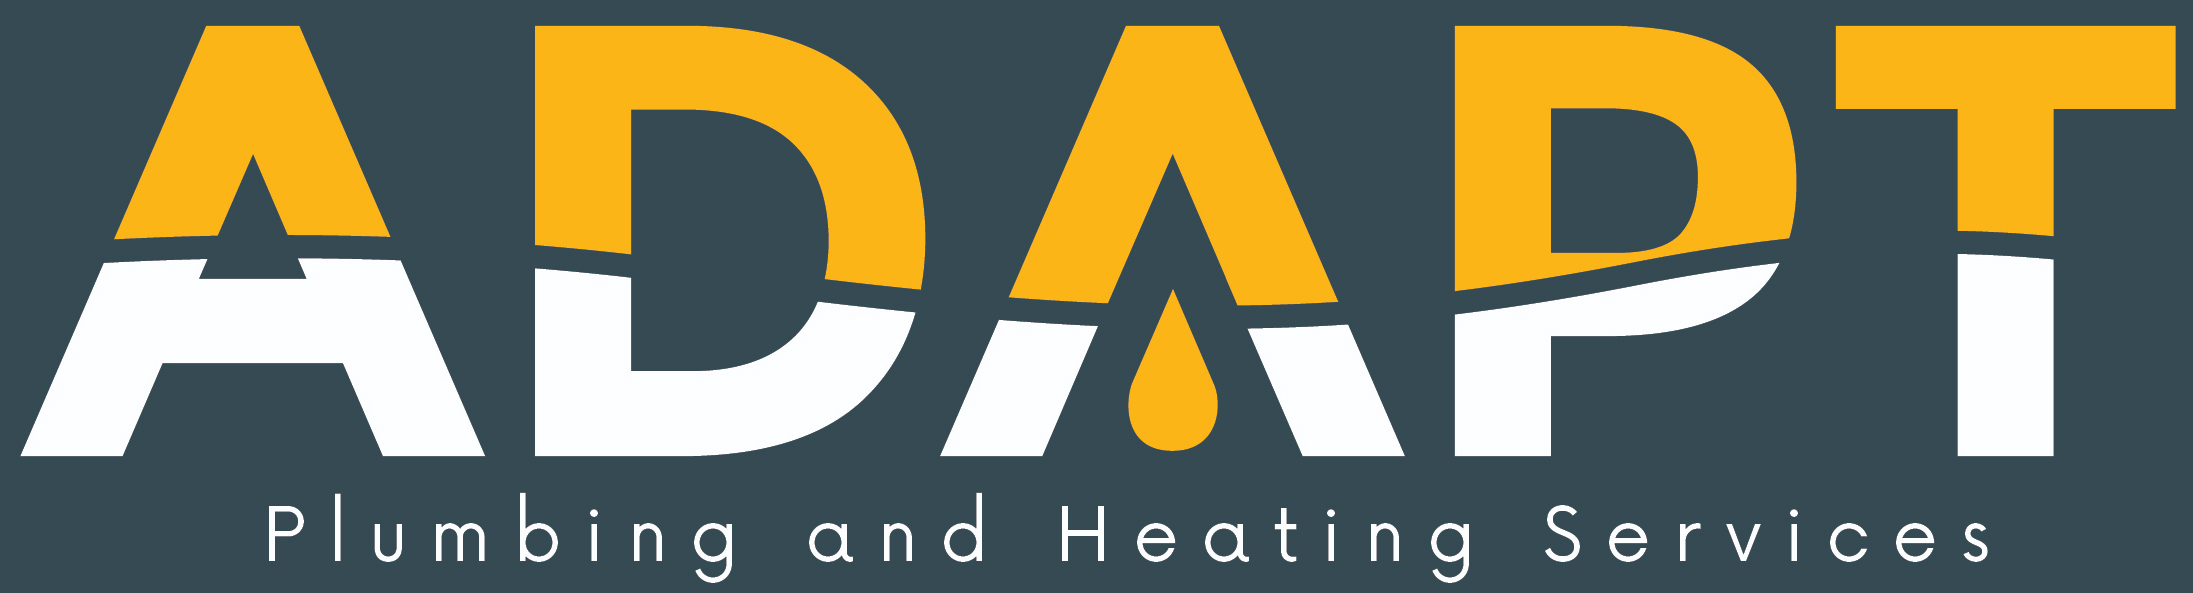 Adapt Plumbing & Heating Engineer Ltd